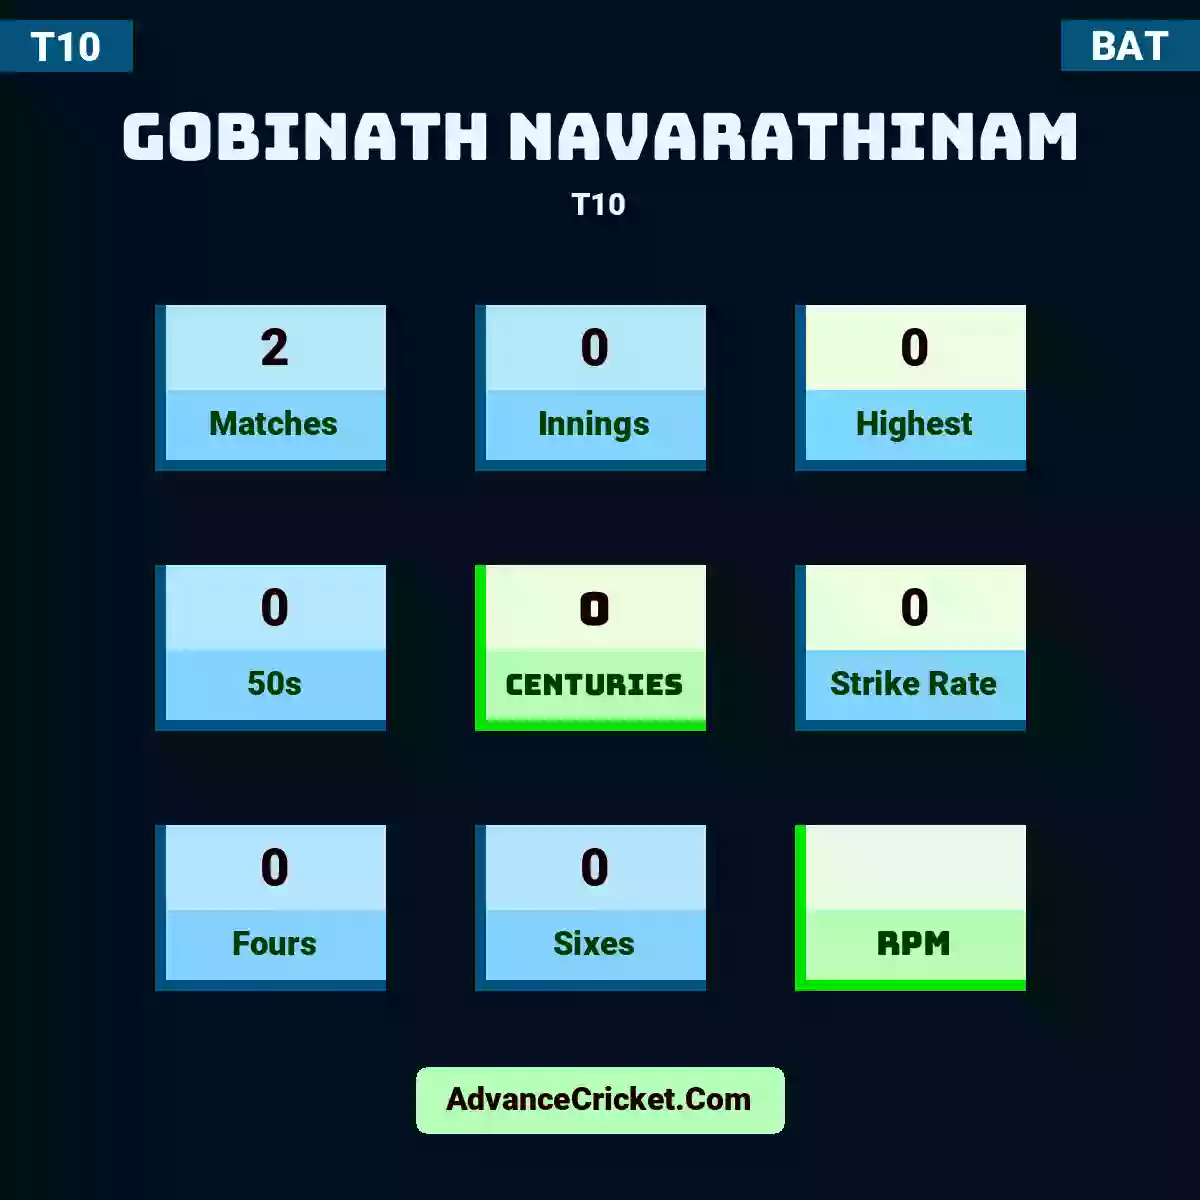 Gobinath Navarathinam T10 , Gobinath Navarathinam played 2 matches, scored 0 runs as highest, 0 half-centuries, and 0 centuries, with a strike rate of 0. G.Navarathinam hit 0 fours and 0 sixes.